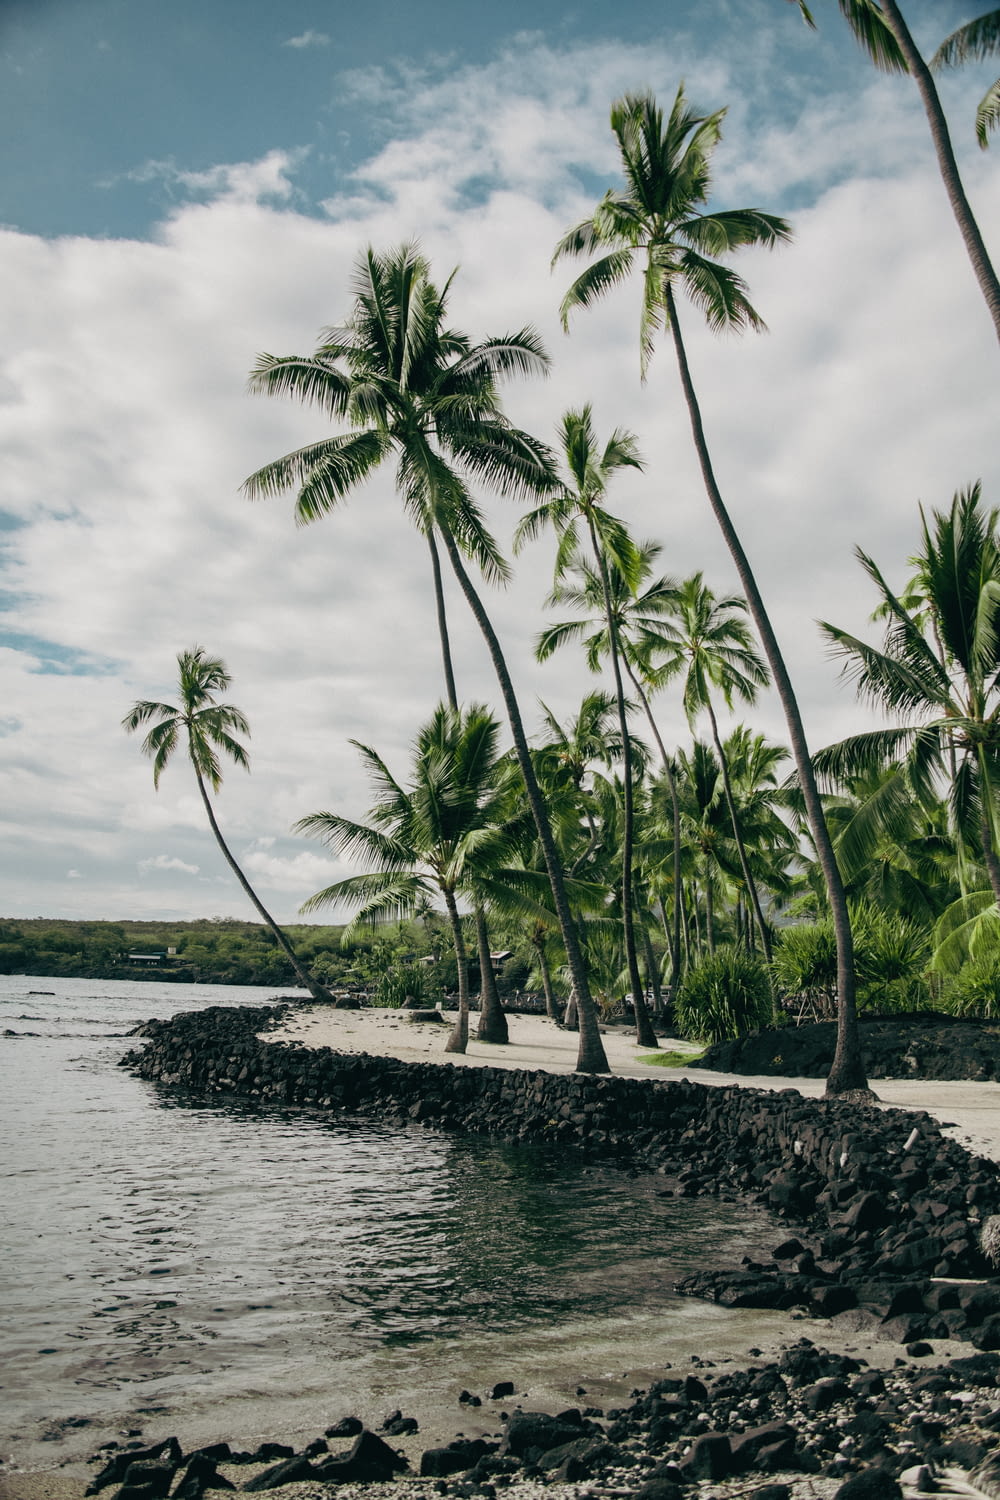 palm trees line the shore of a tropical beach